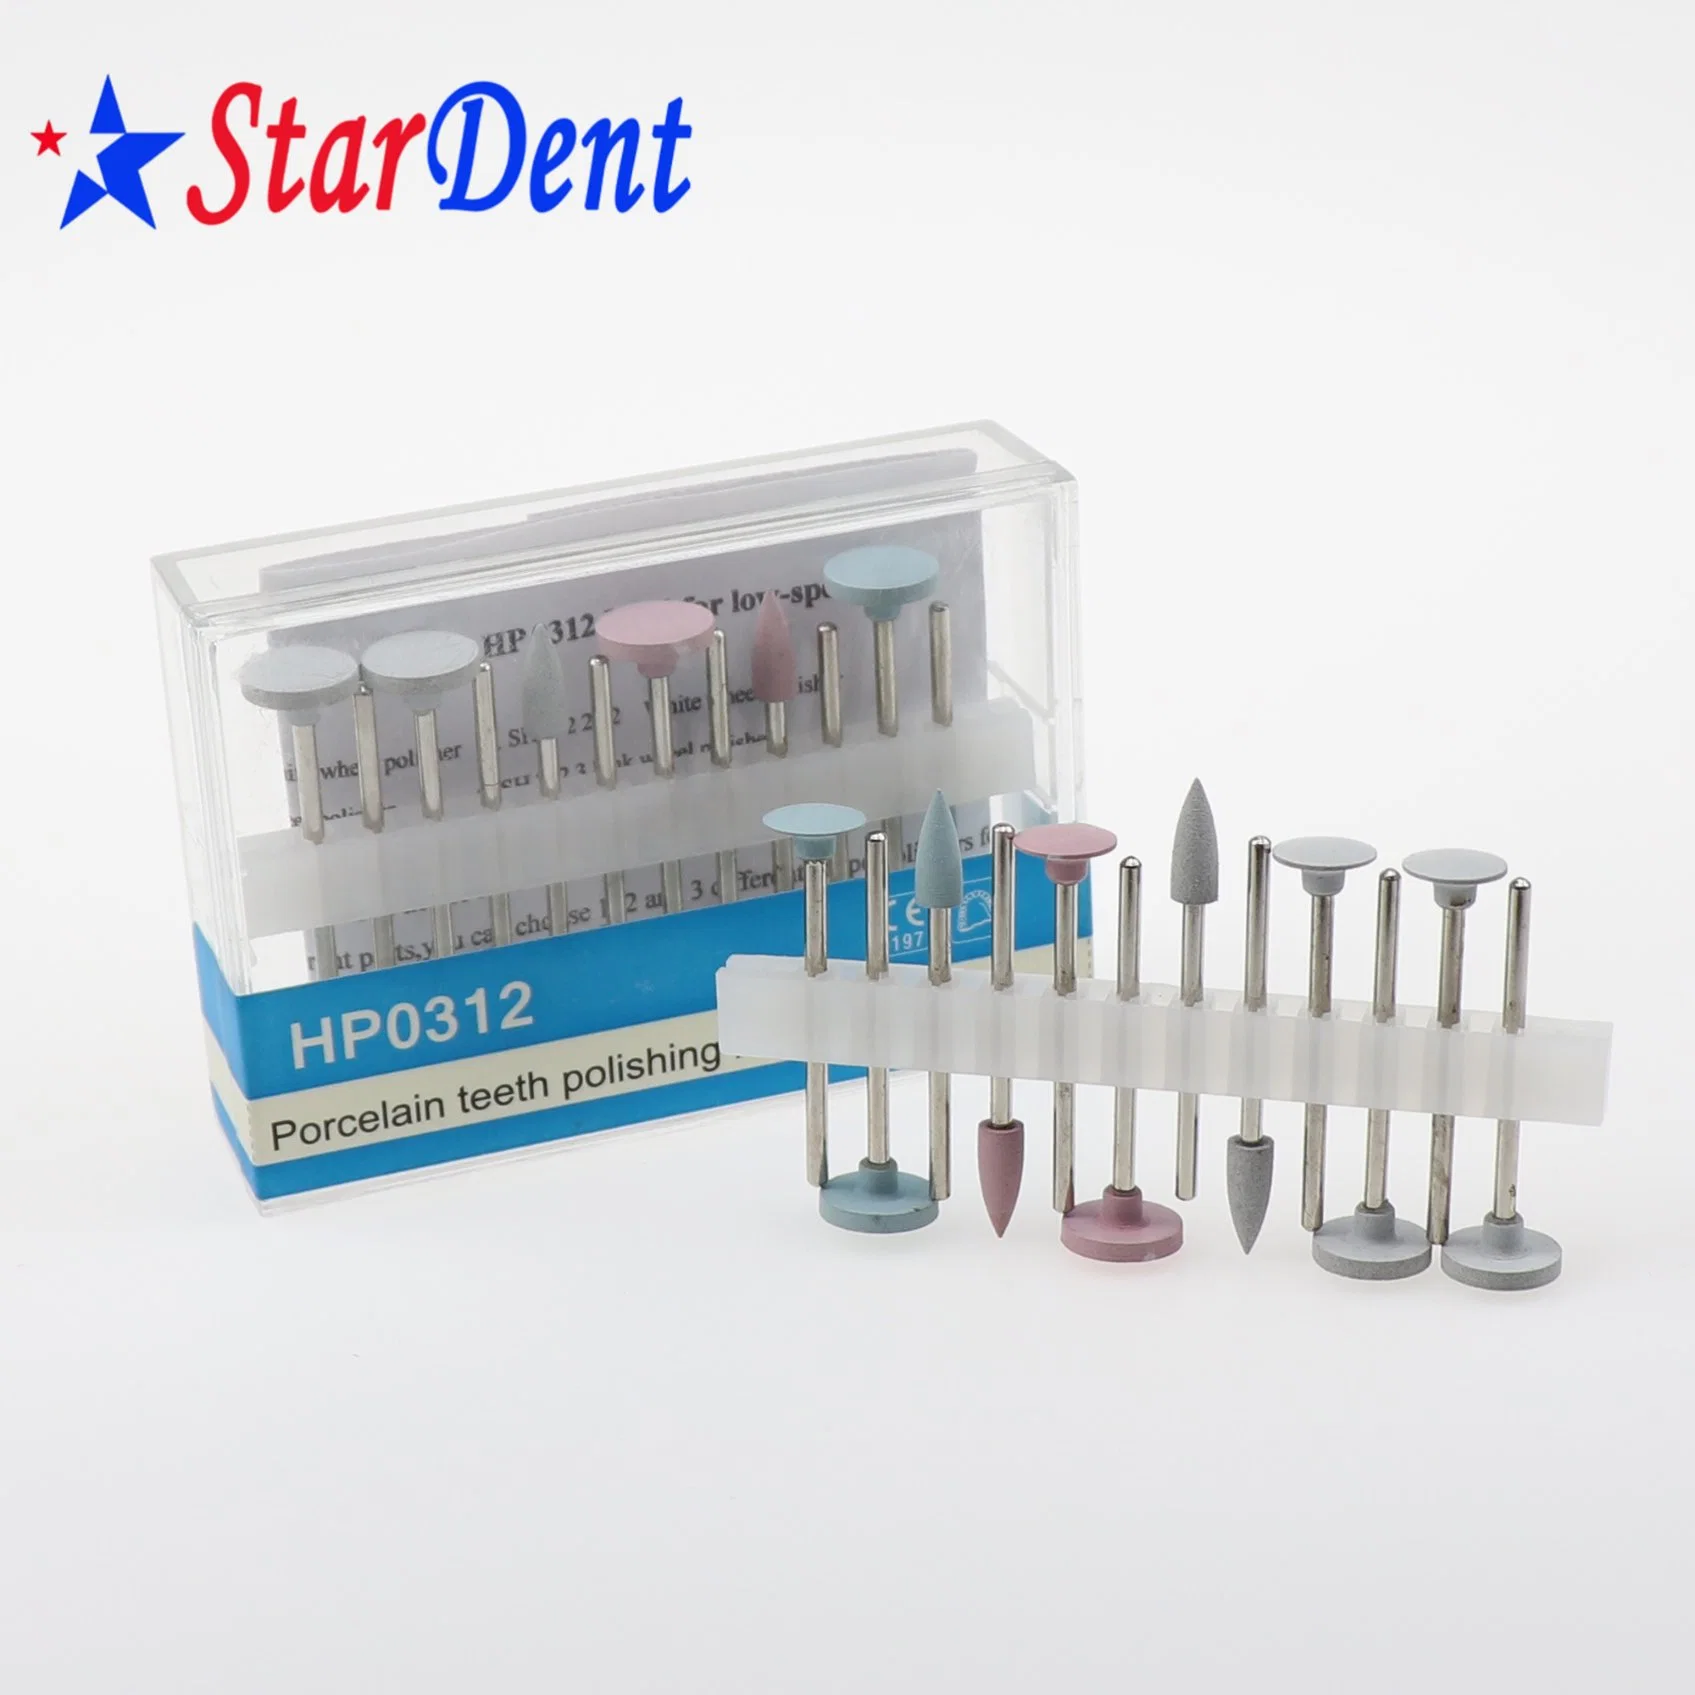 Materiais de polimento dental Kits de polimento Porcerlian rebarbas de borracha com 12 PCS/caixa